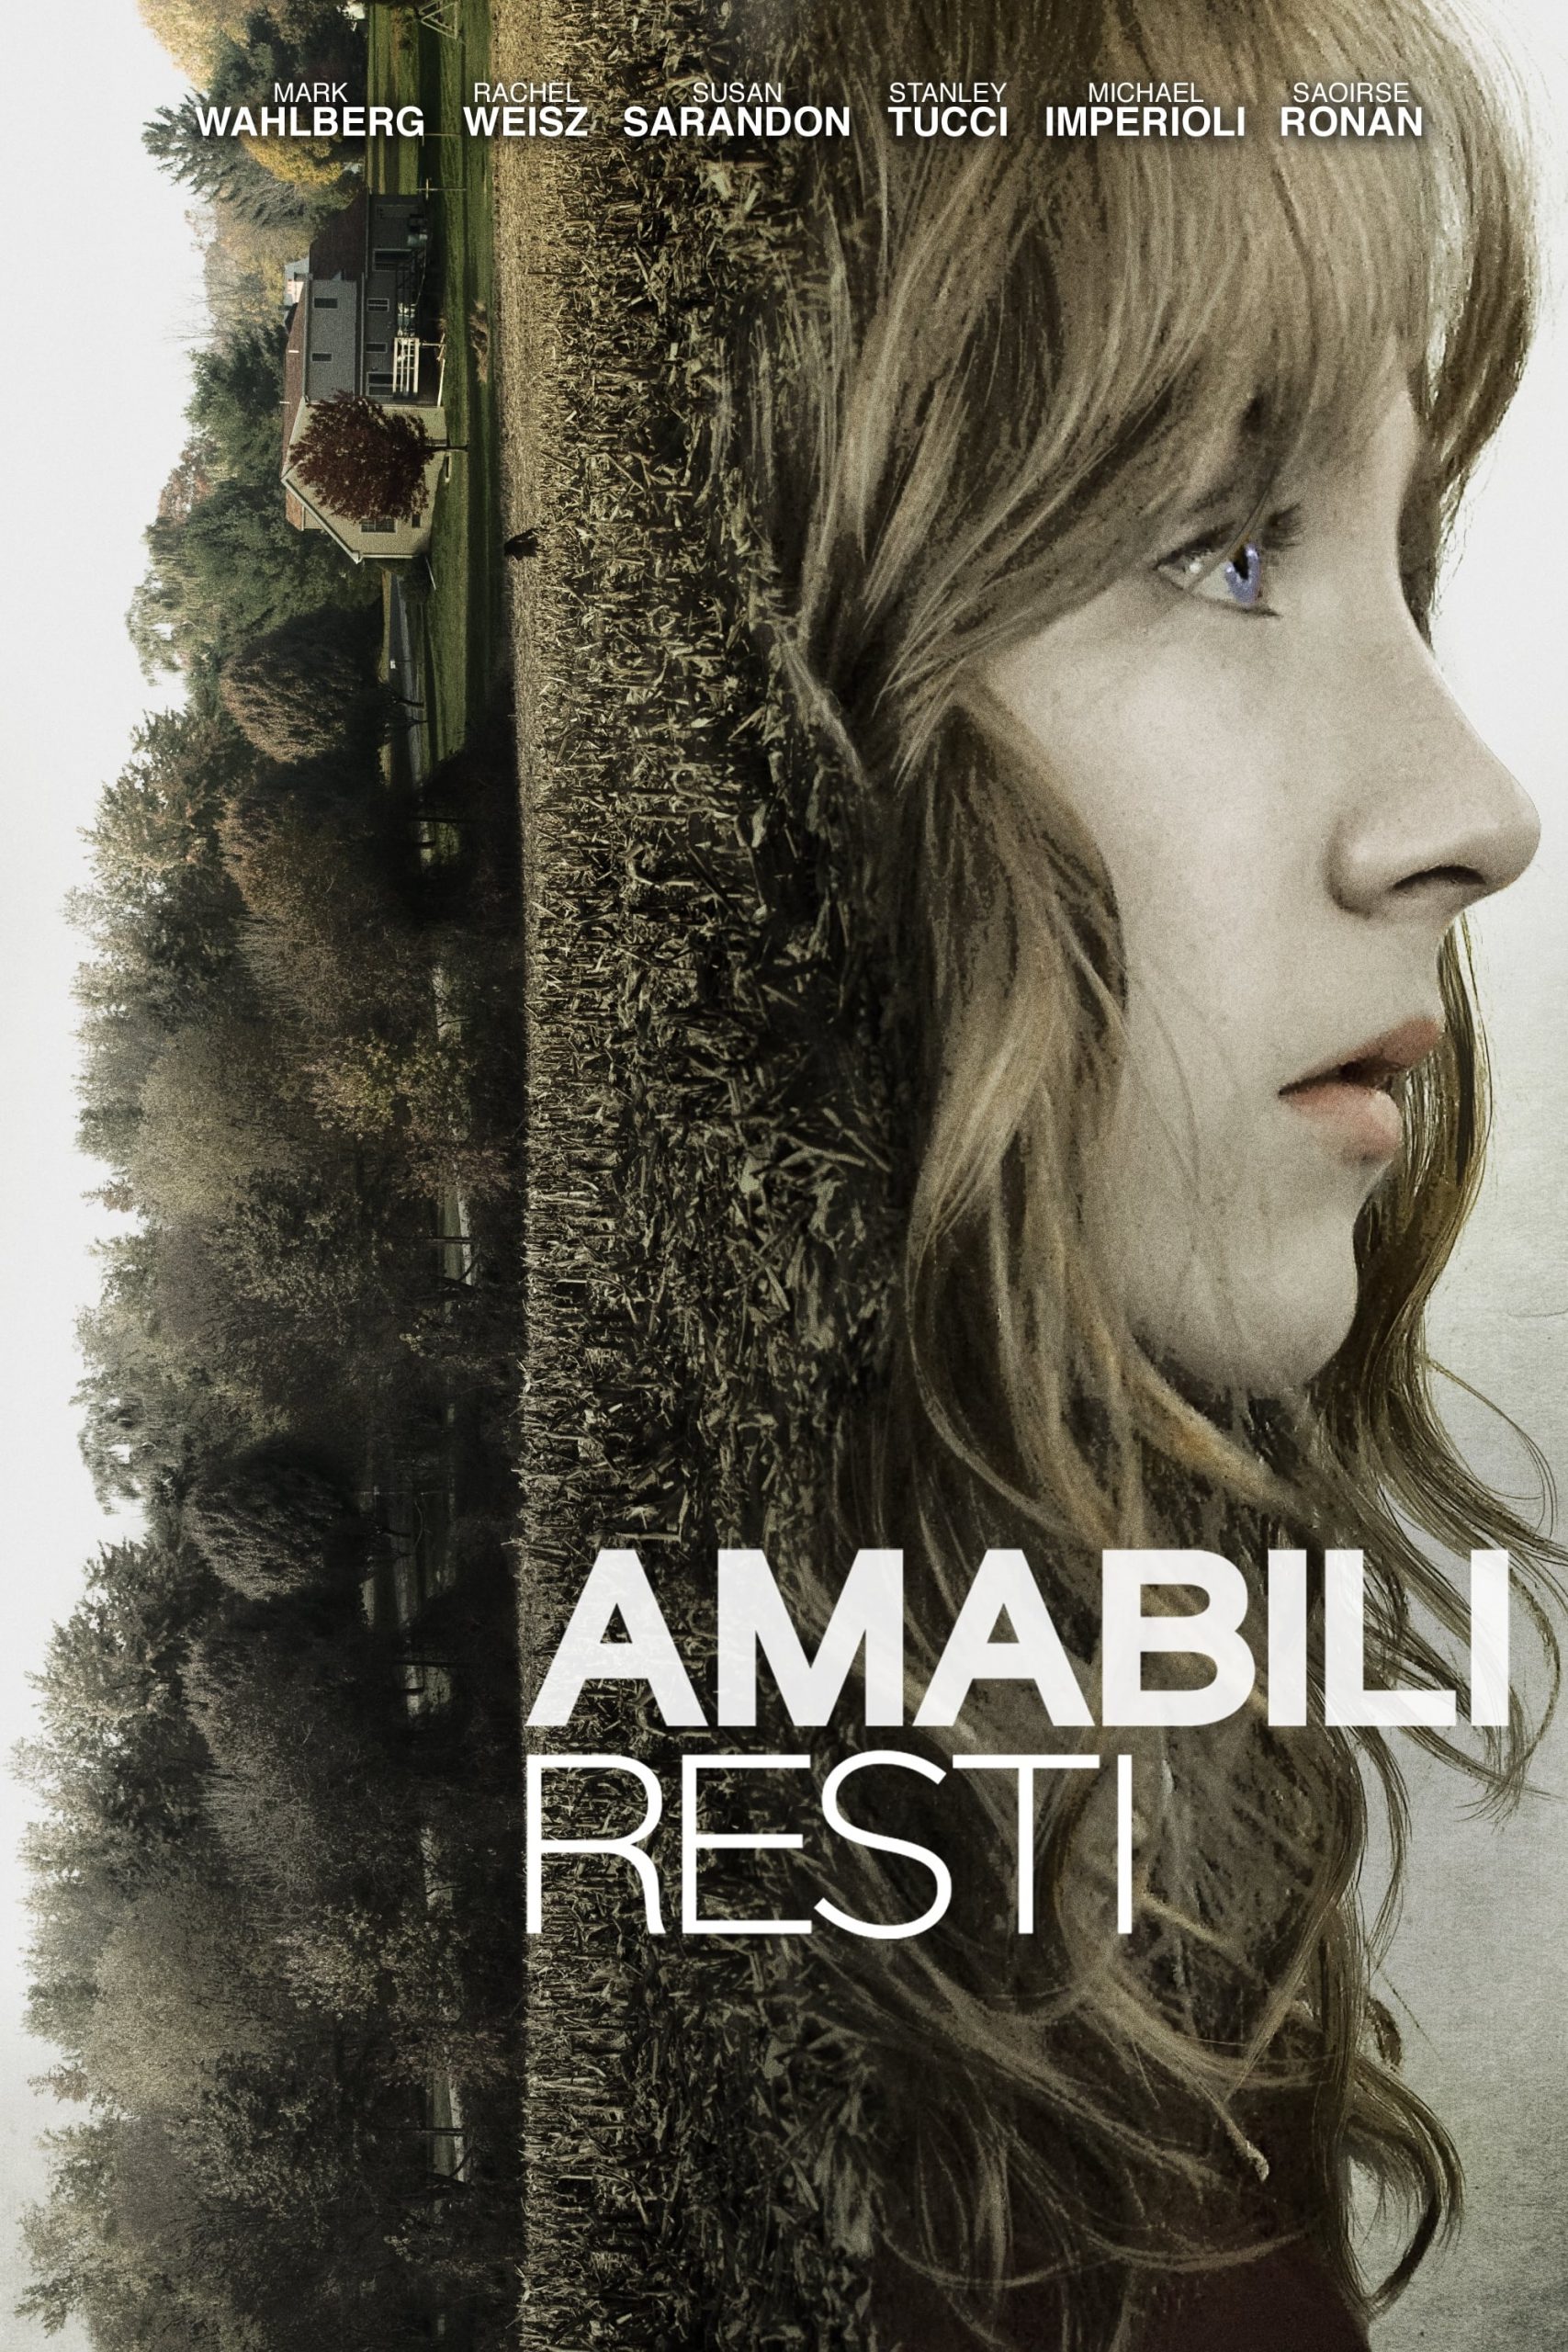 Amabili resti [HD] (2010)